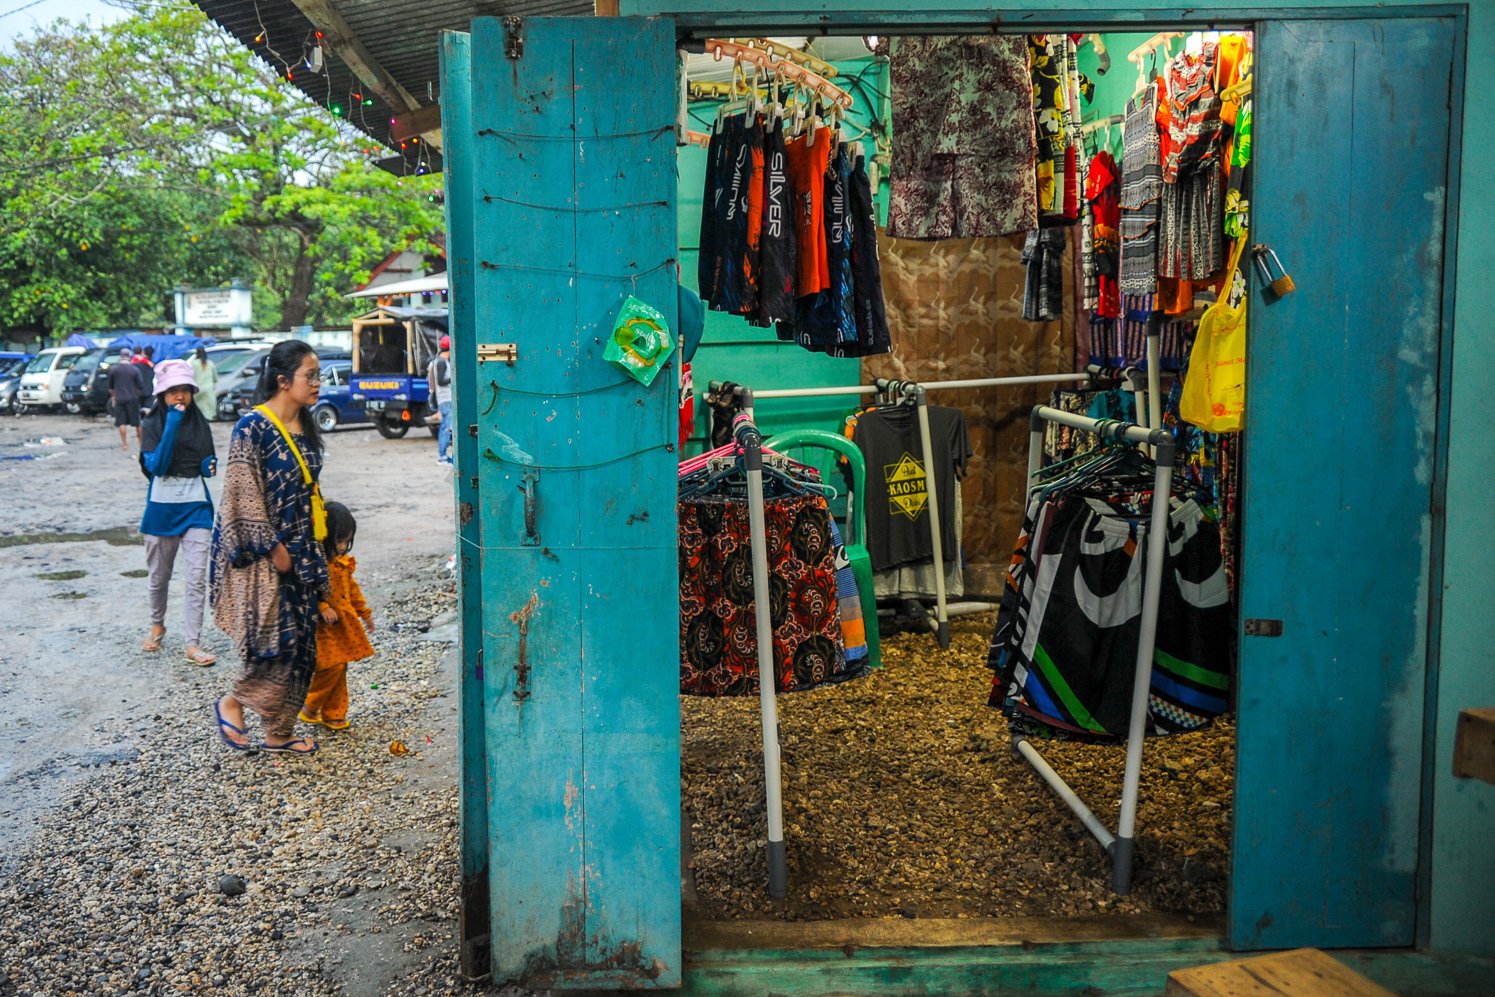 Wisatawan mengunjungi sebuah toko souvenir di kawasan Pantai Santolo, Pameungpeuk, Kabupaten Garut.